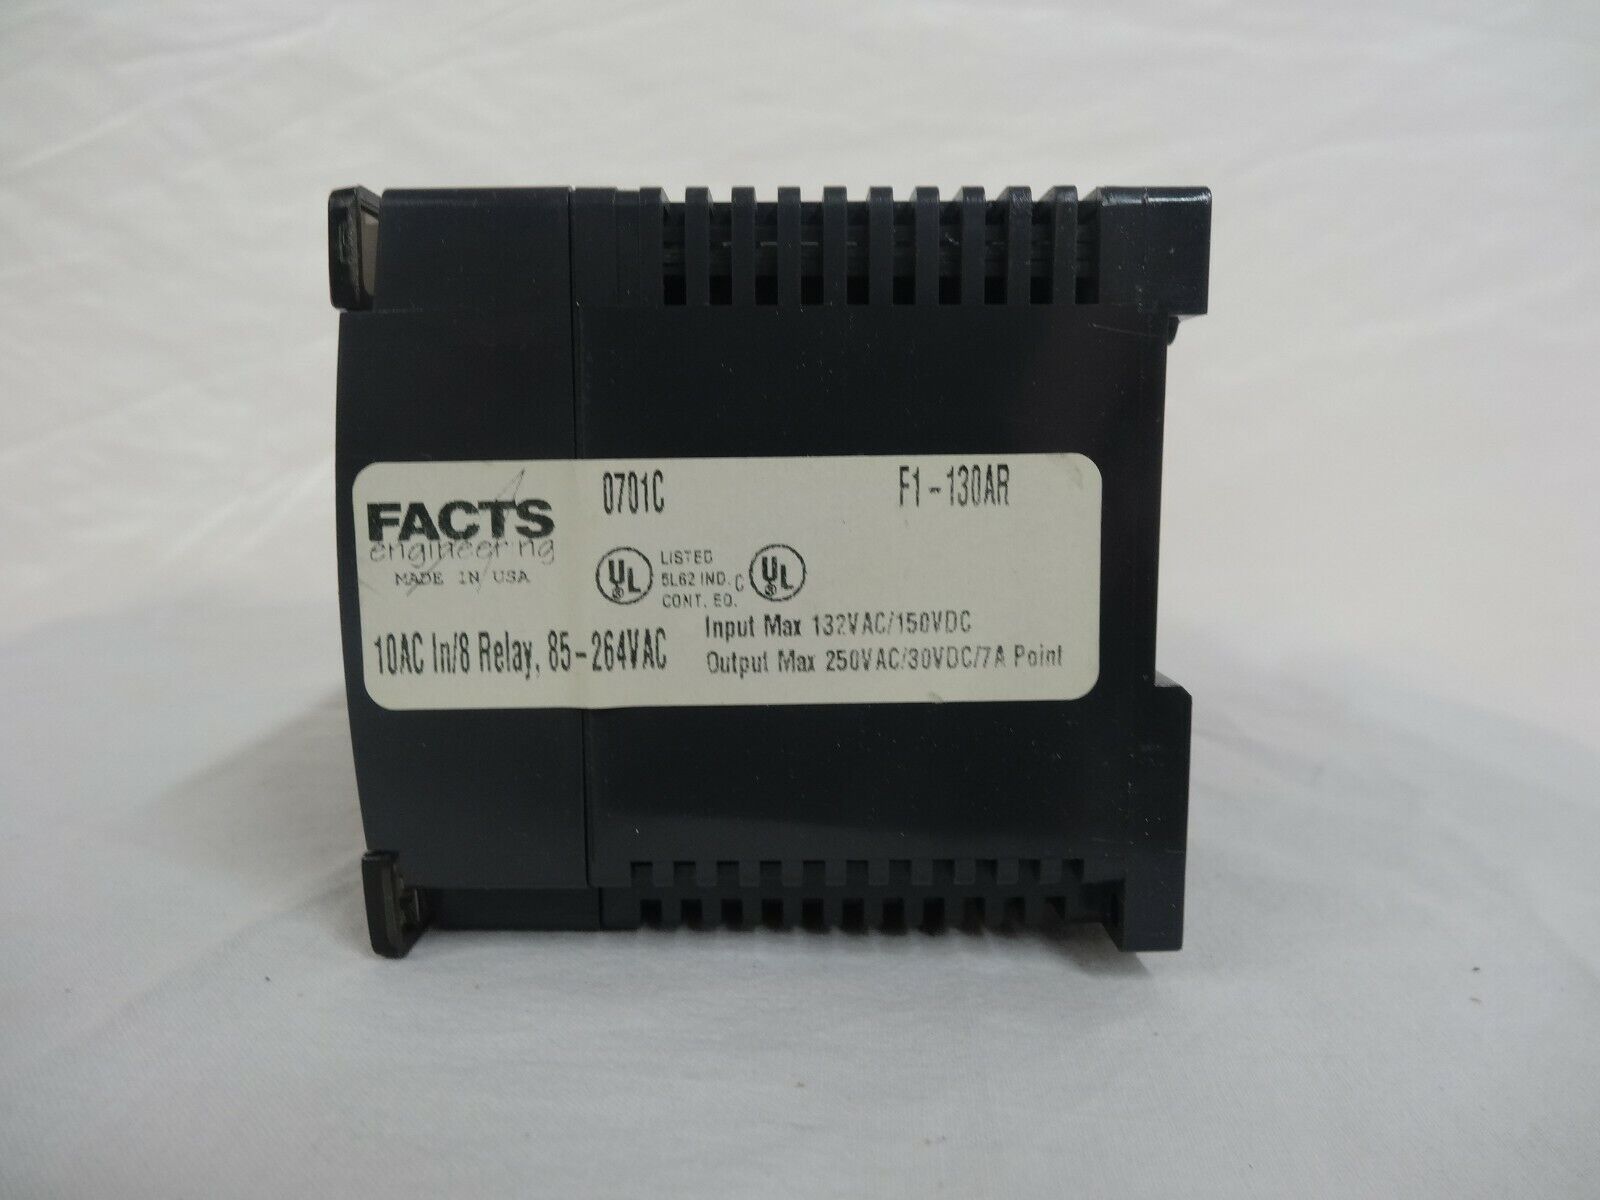 DirectLOGIC 105 Micro Programmable Logic Controller (DL105)